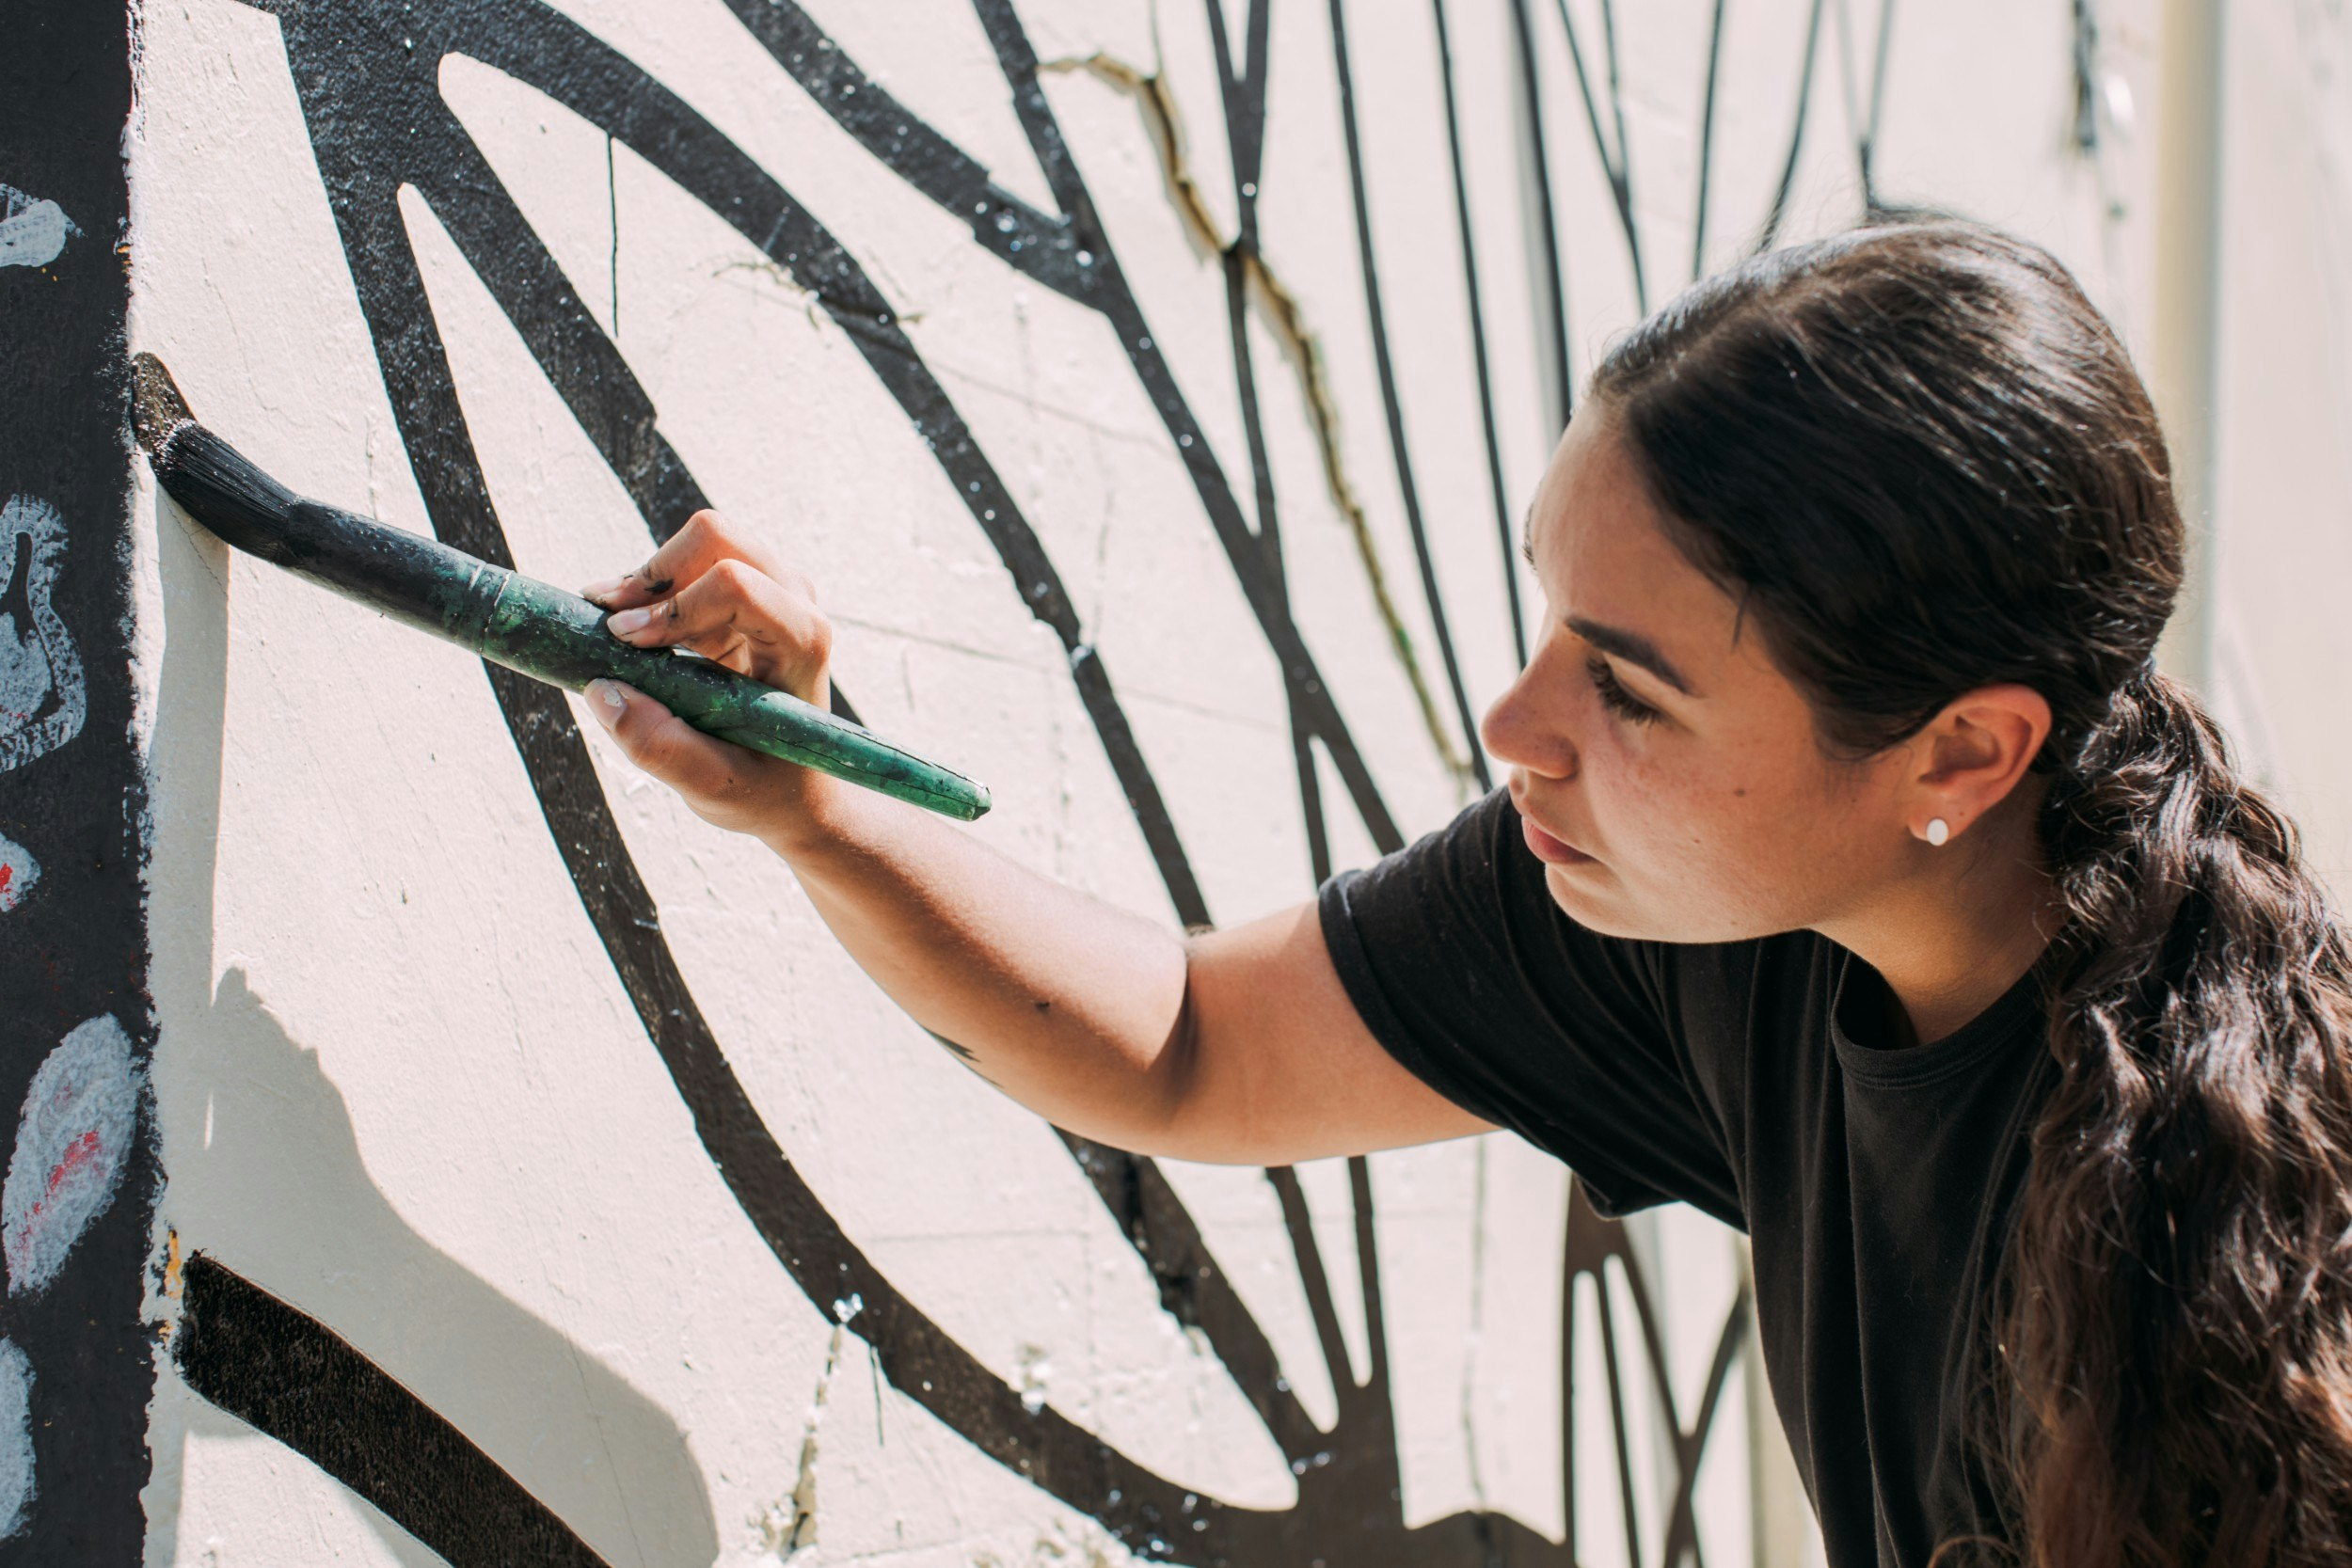 Artist Vero Rivera painting a street mural